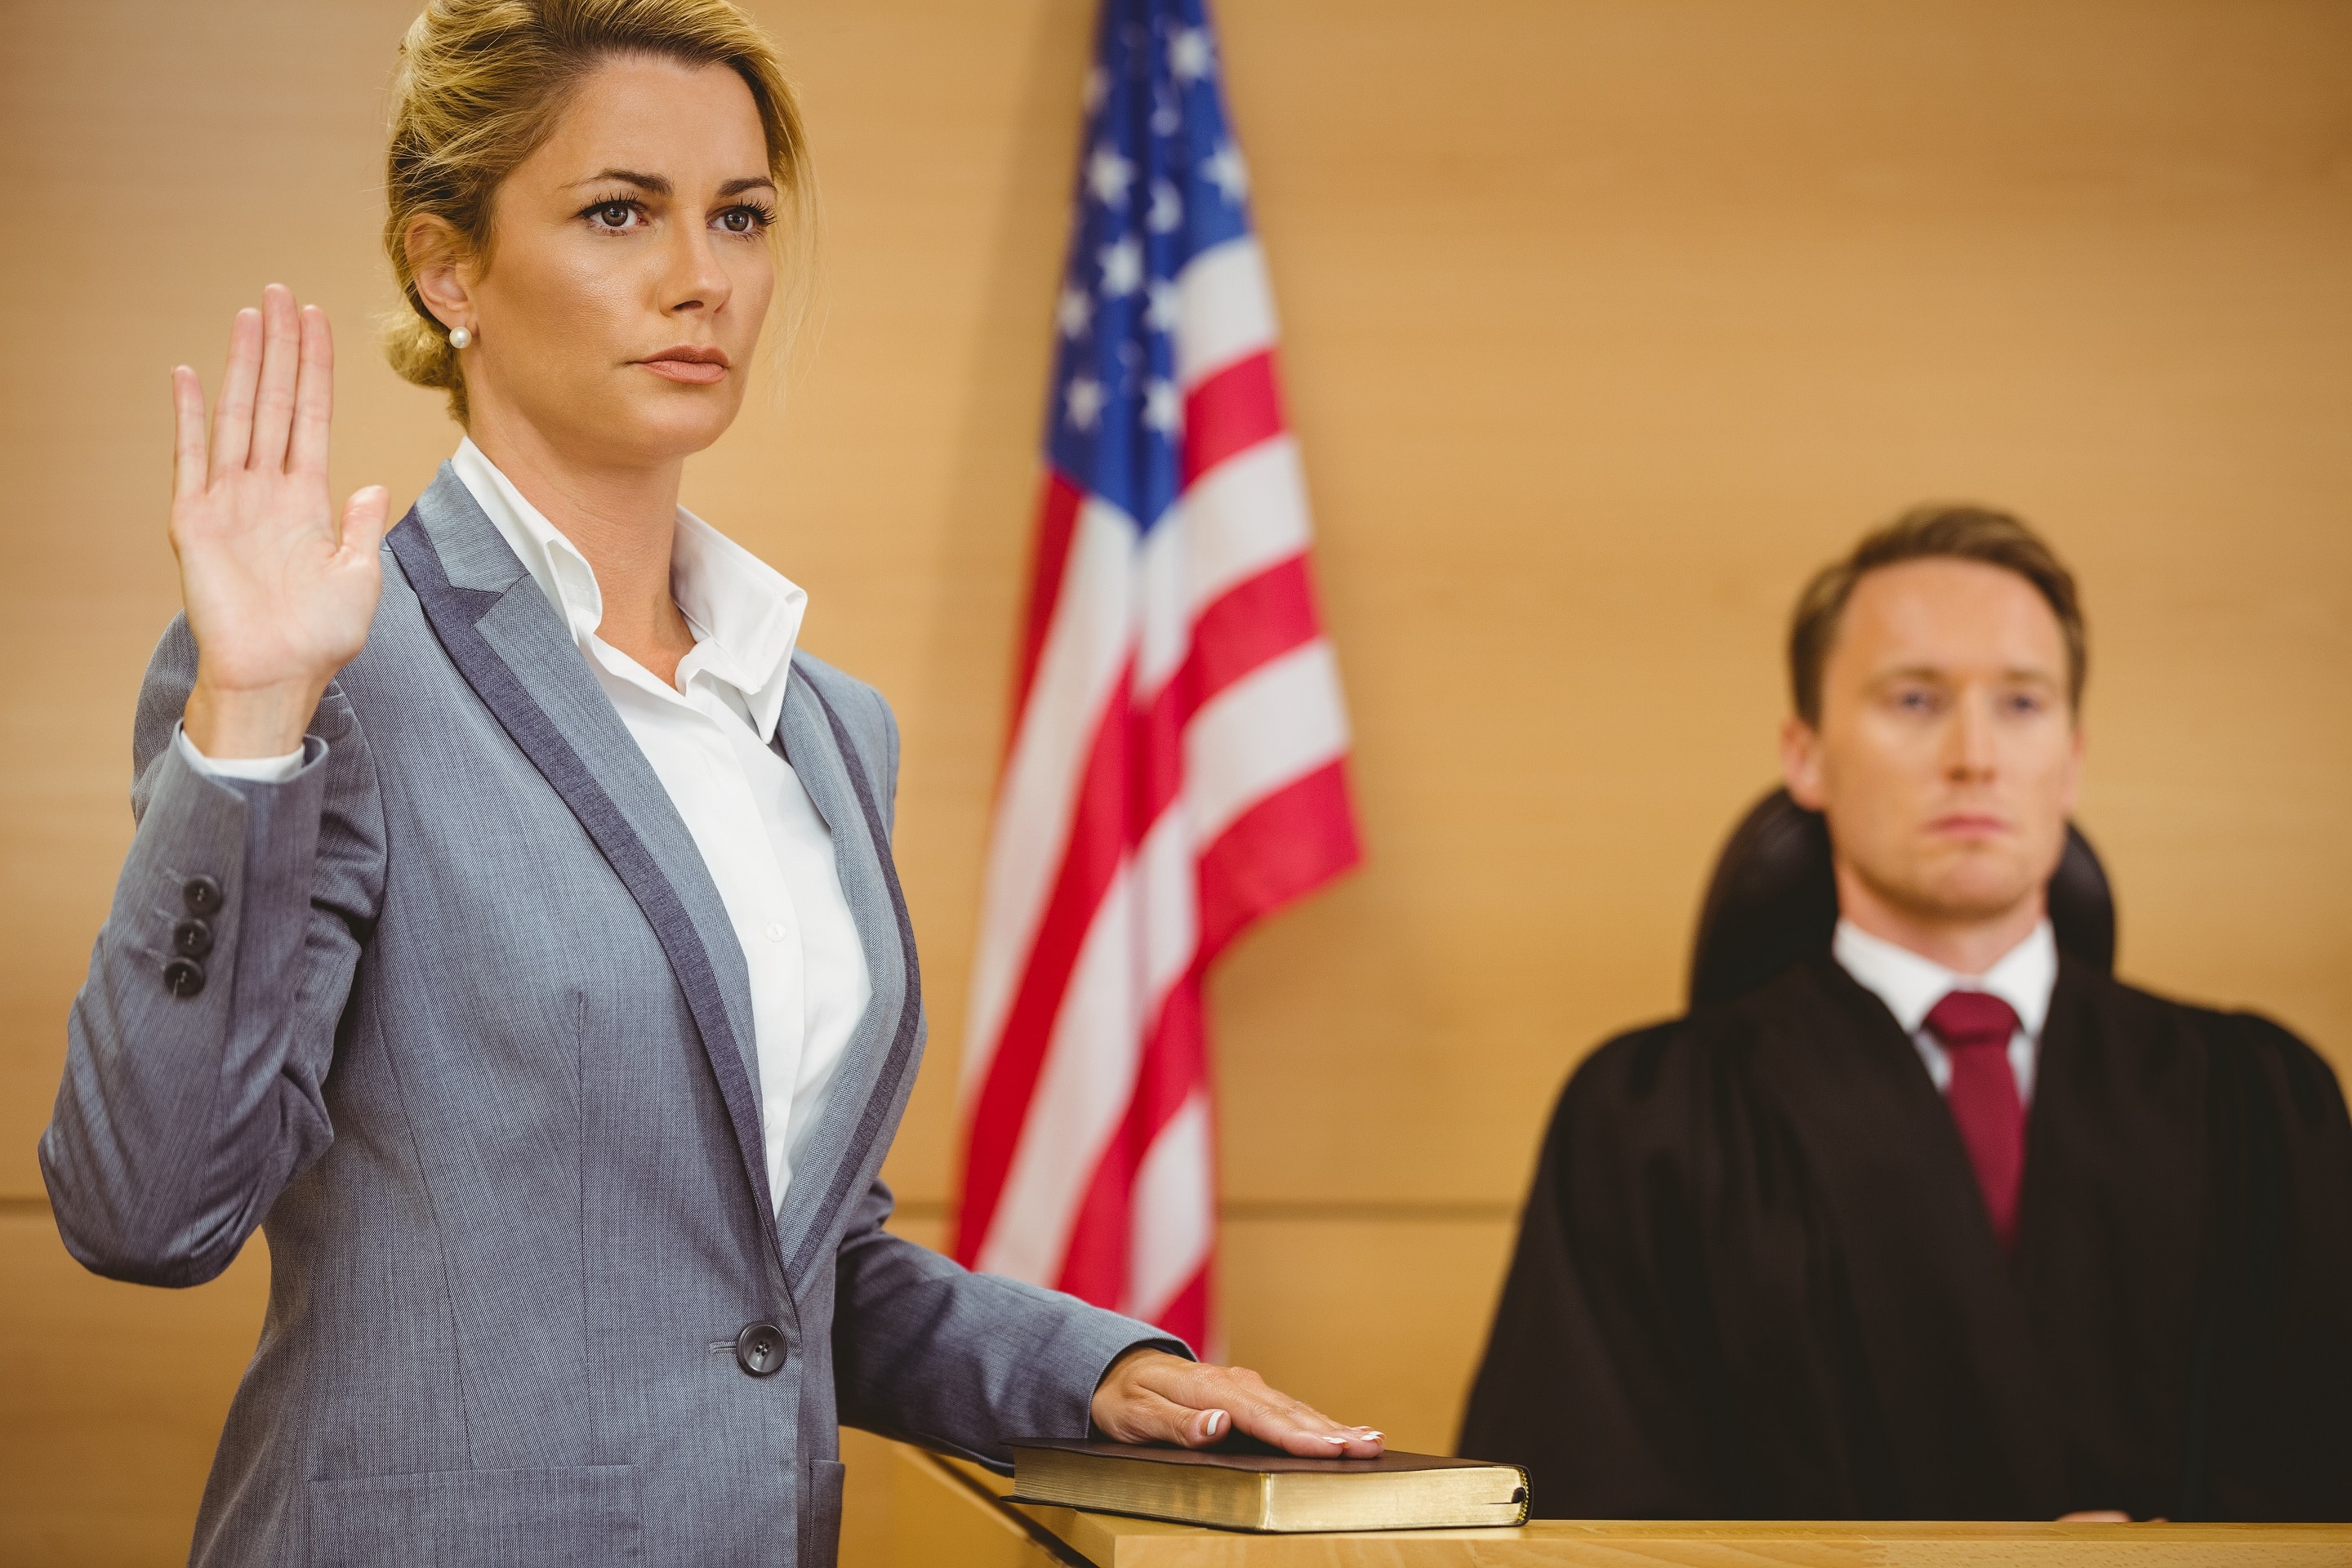 Witness in divorce trial swearing their oath